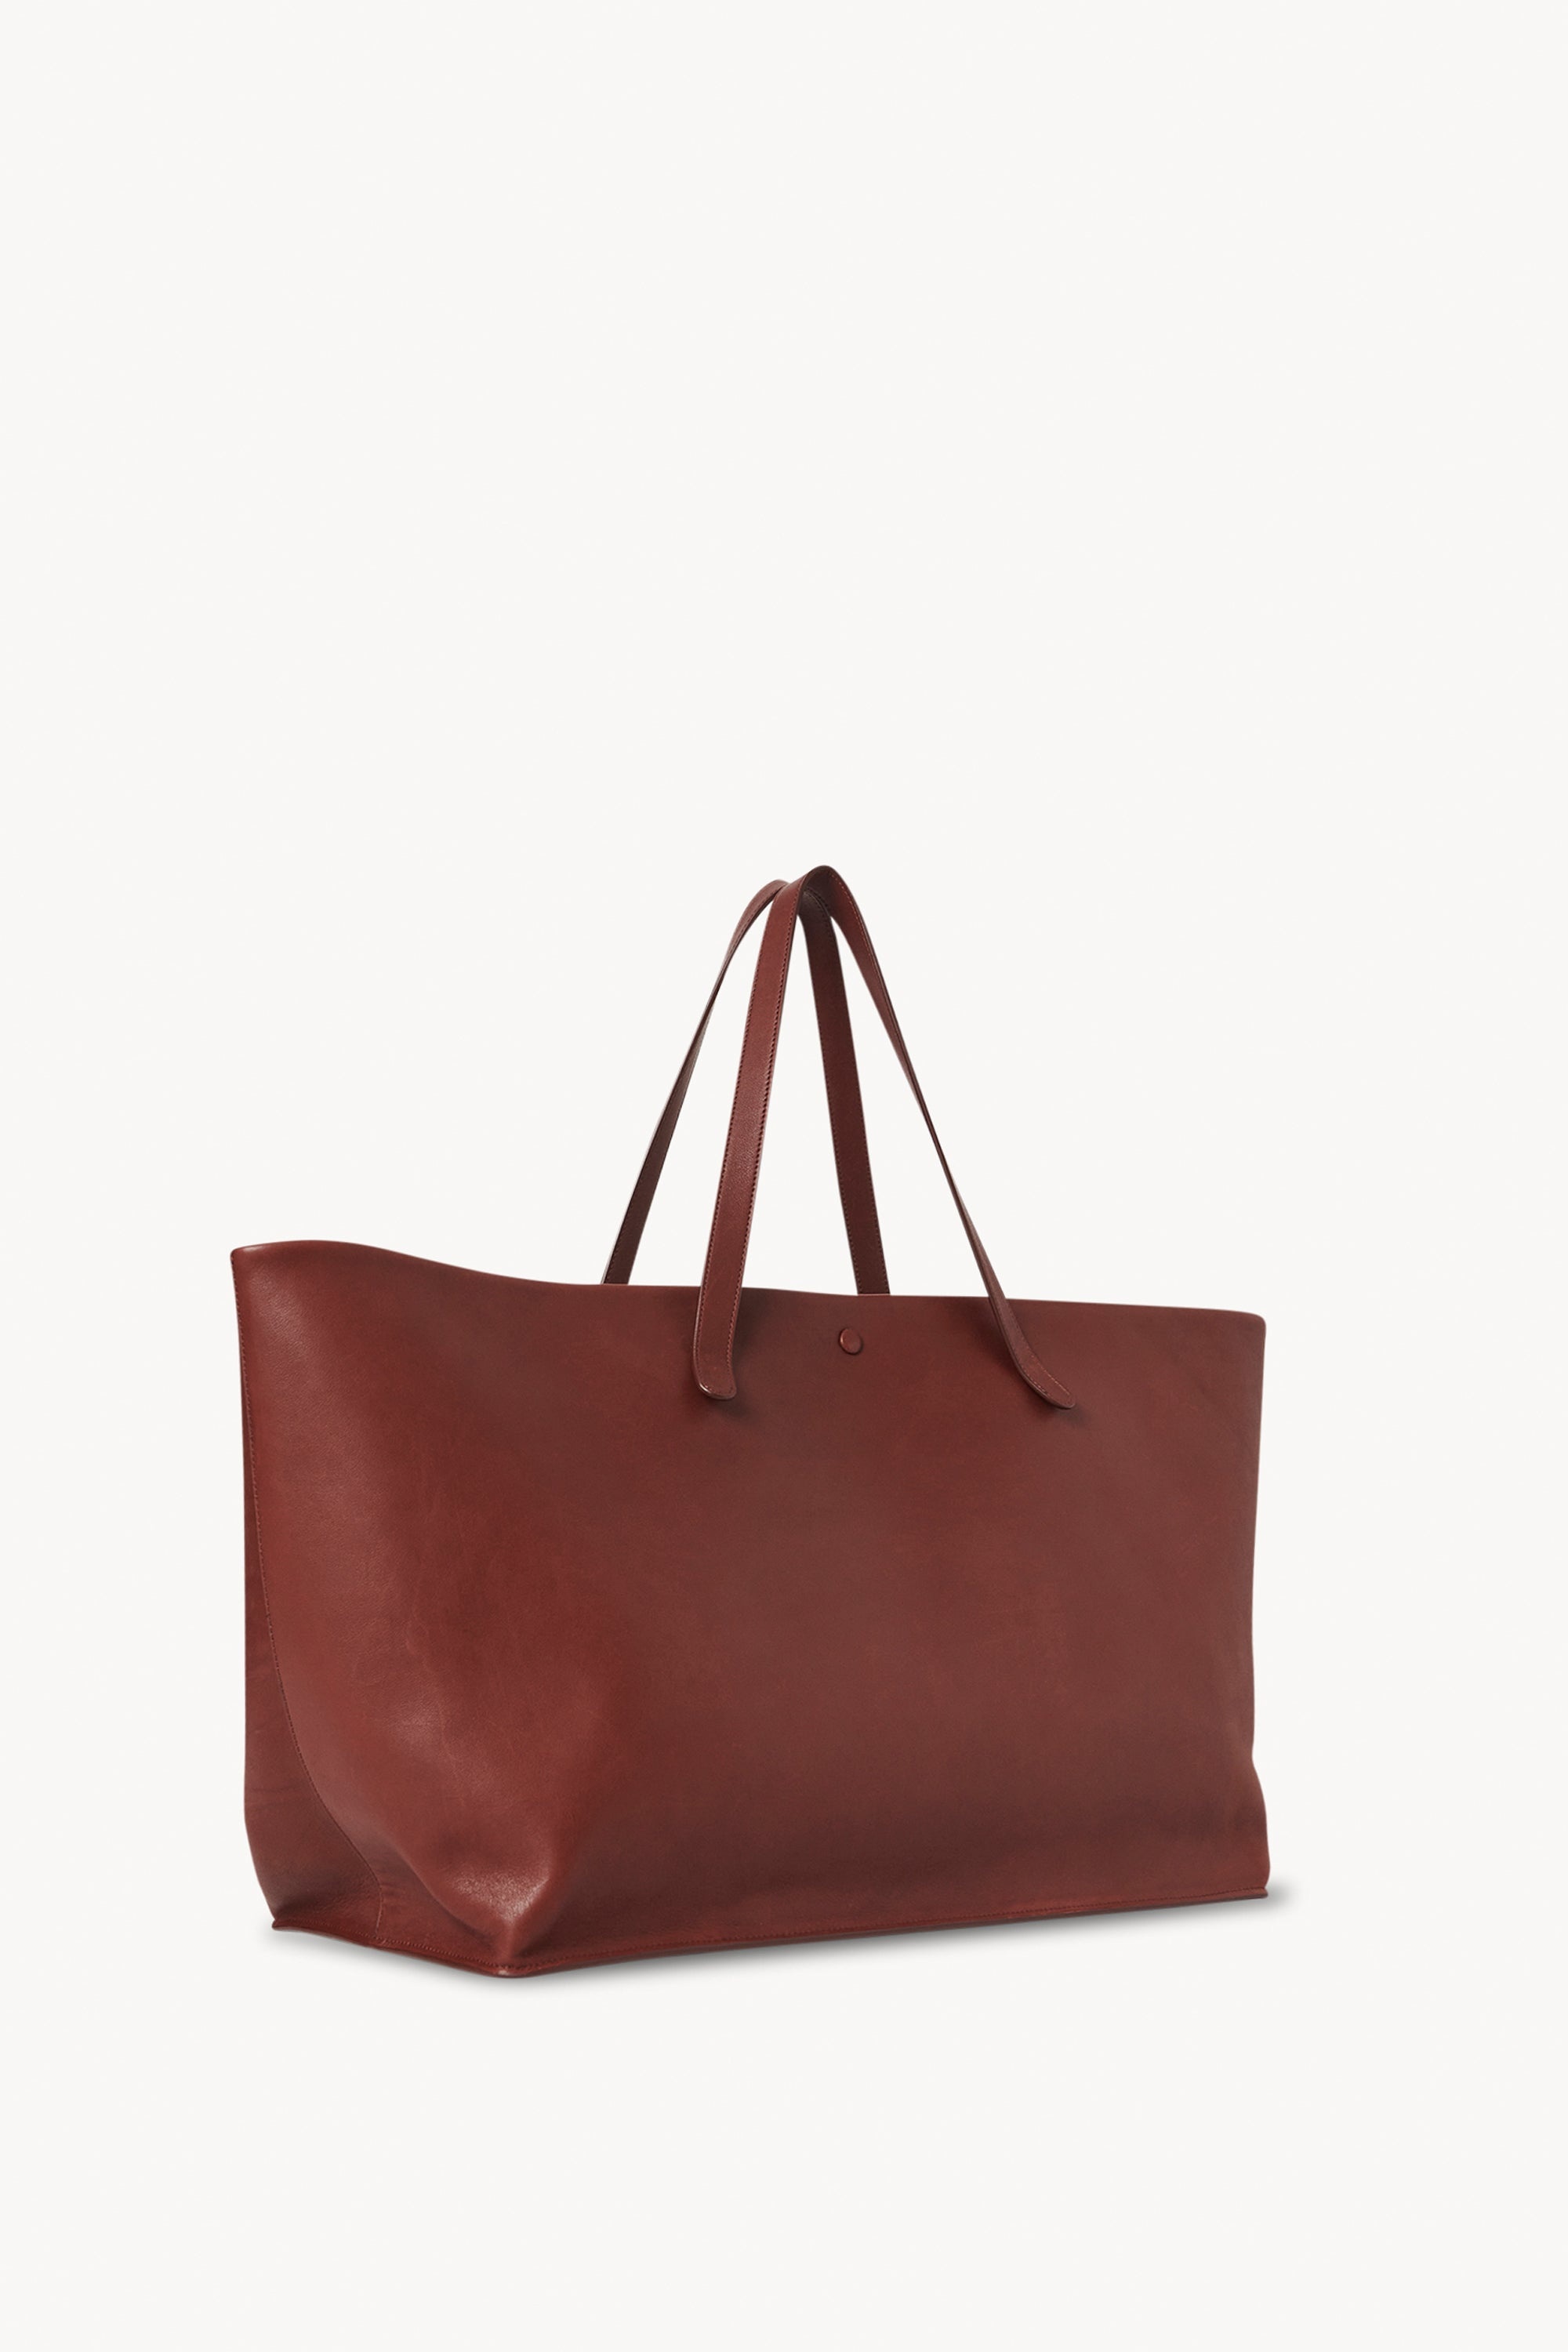 XL Idaho Bag in Leather - 2